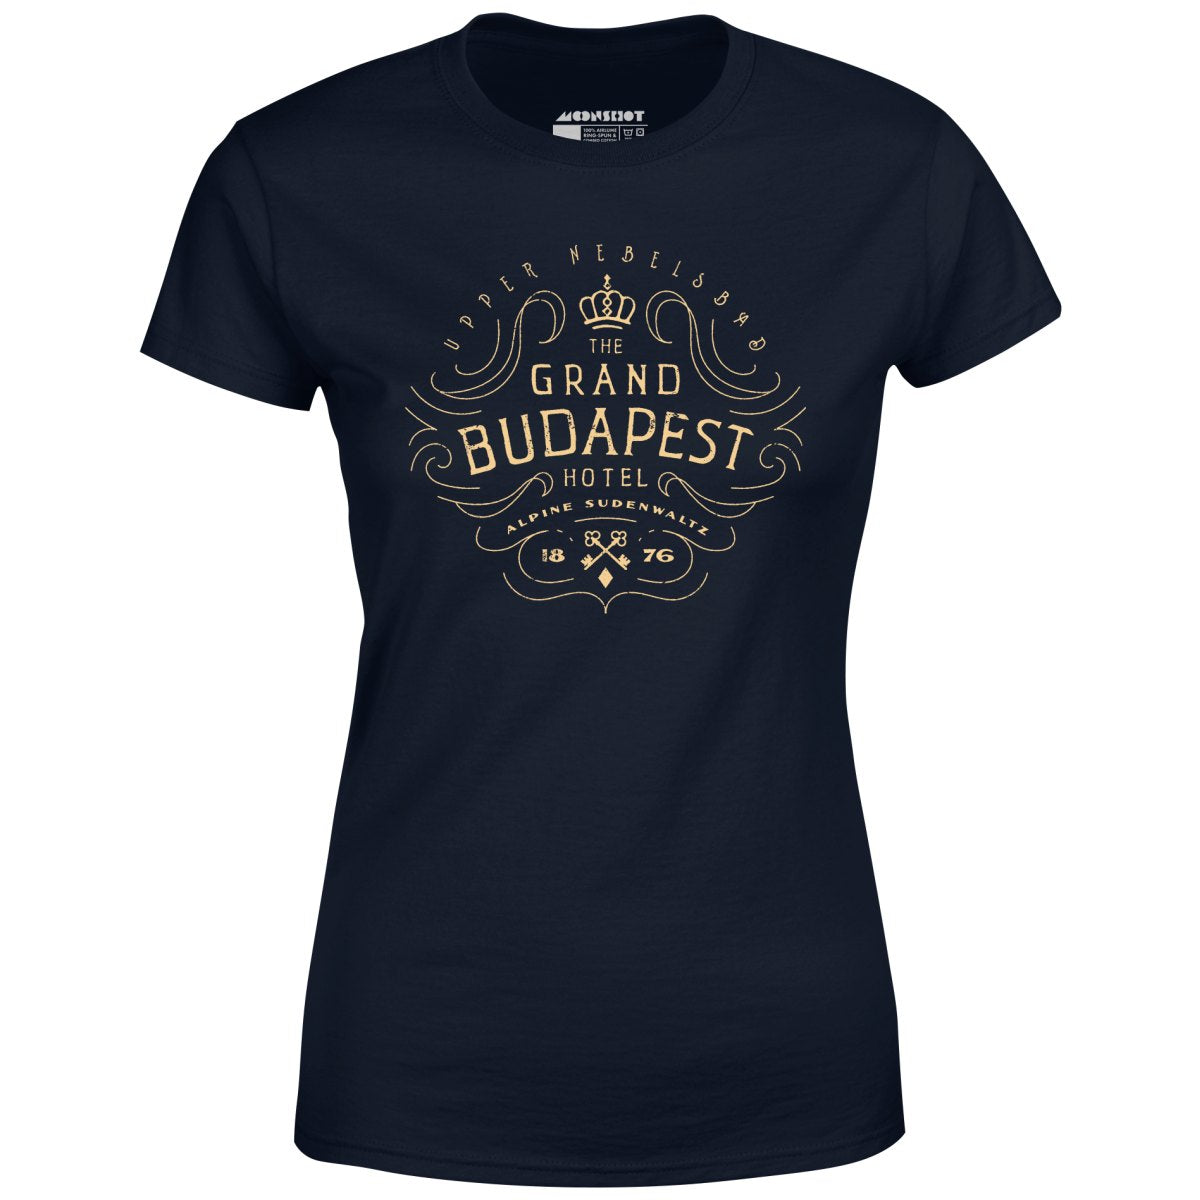 The Grand Budapest Hotel - Women's T-Shirt